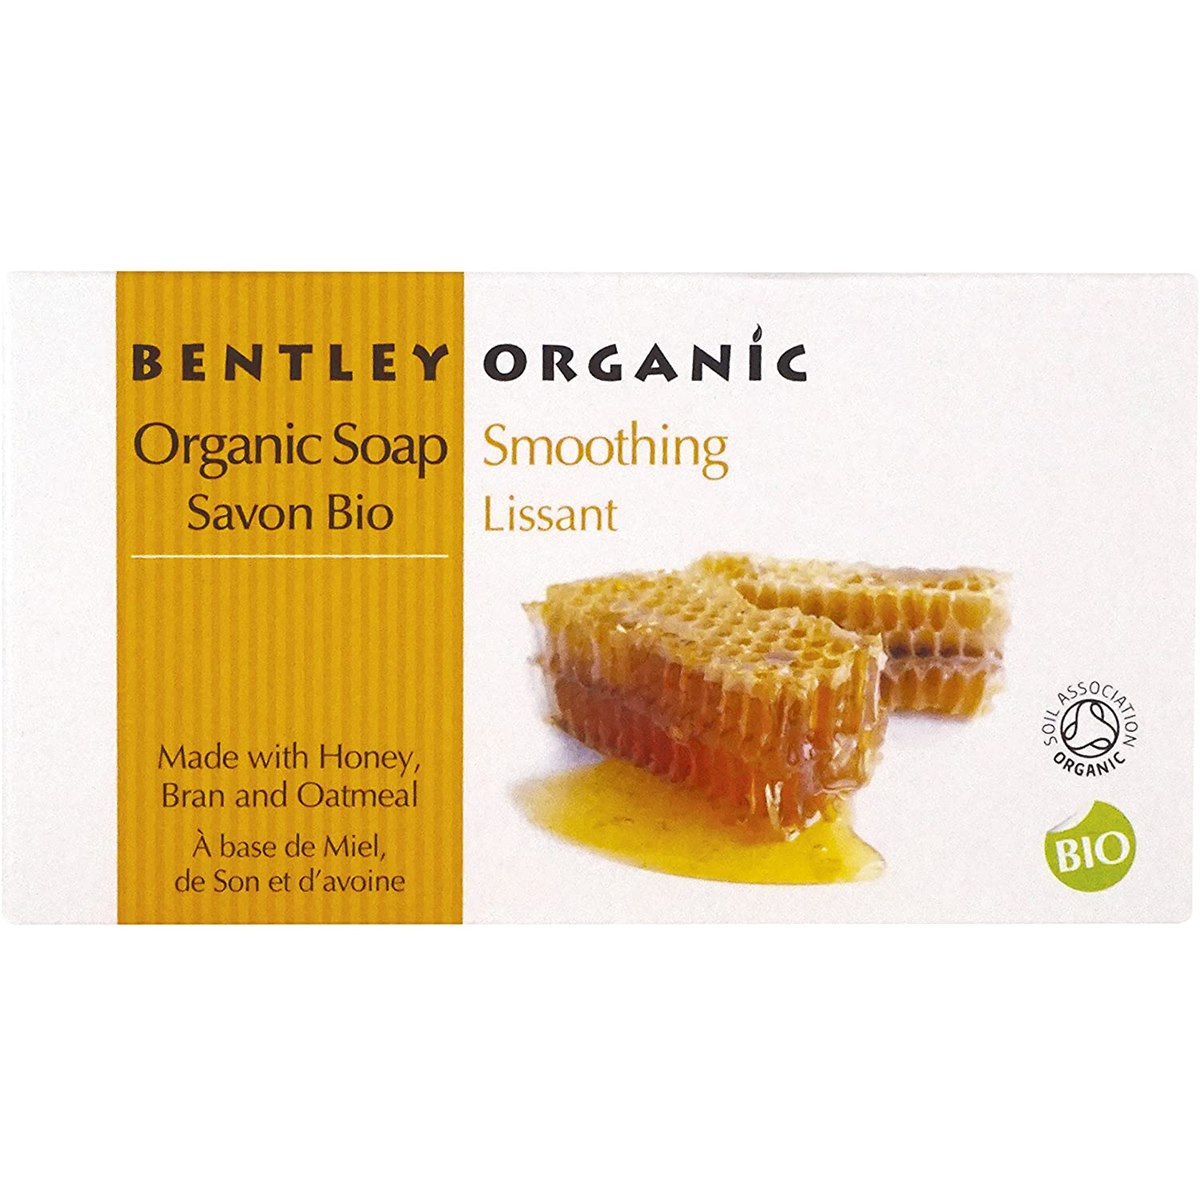 Bentley Organic Smoothing Organic Soap Bar